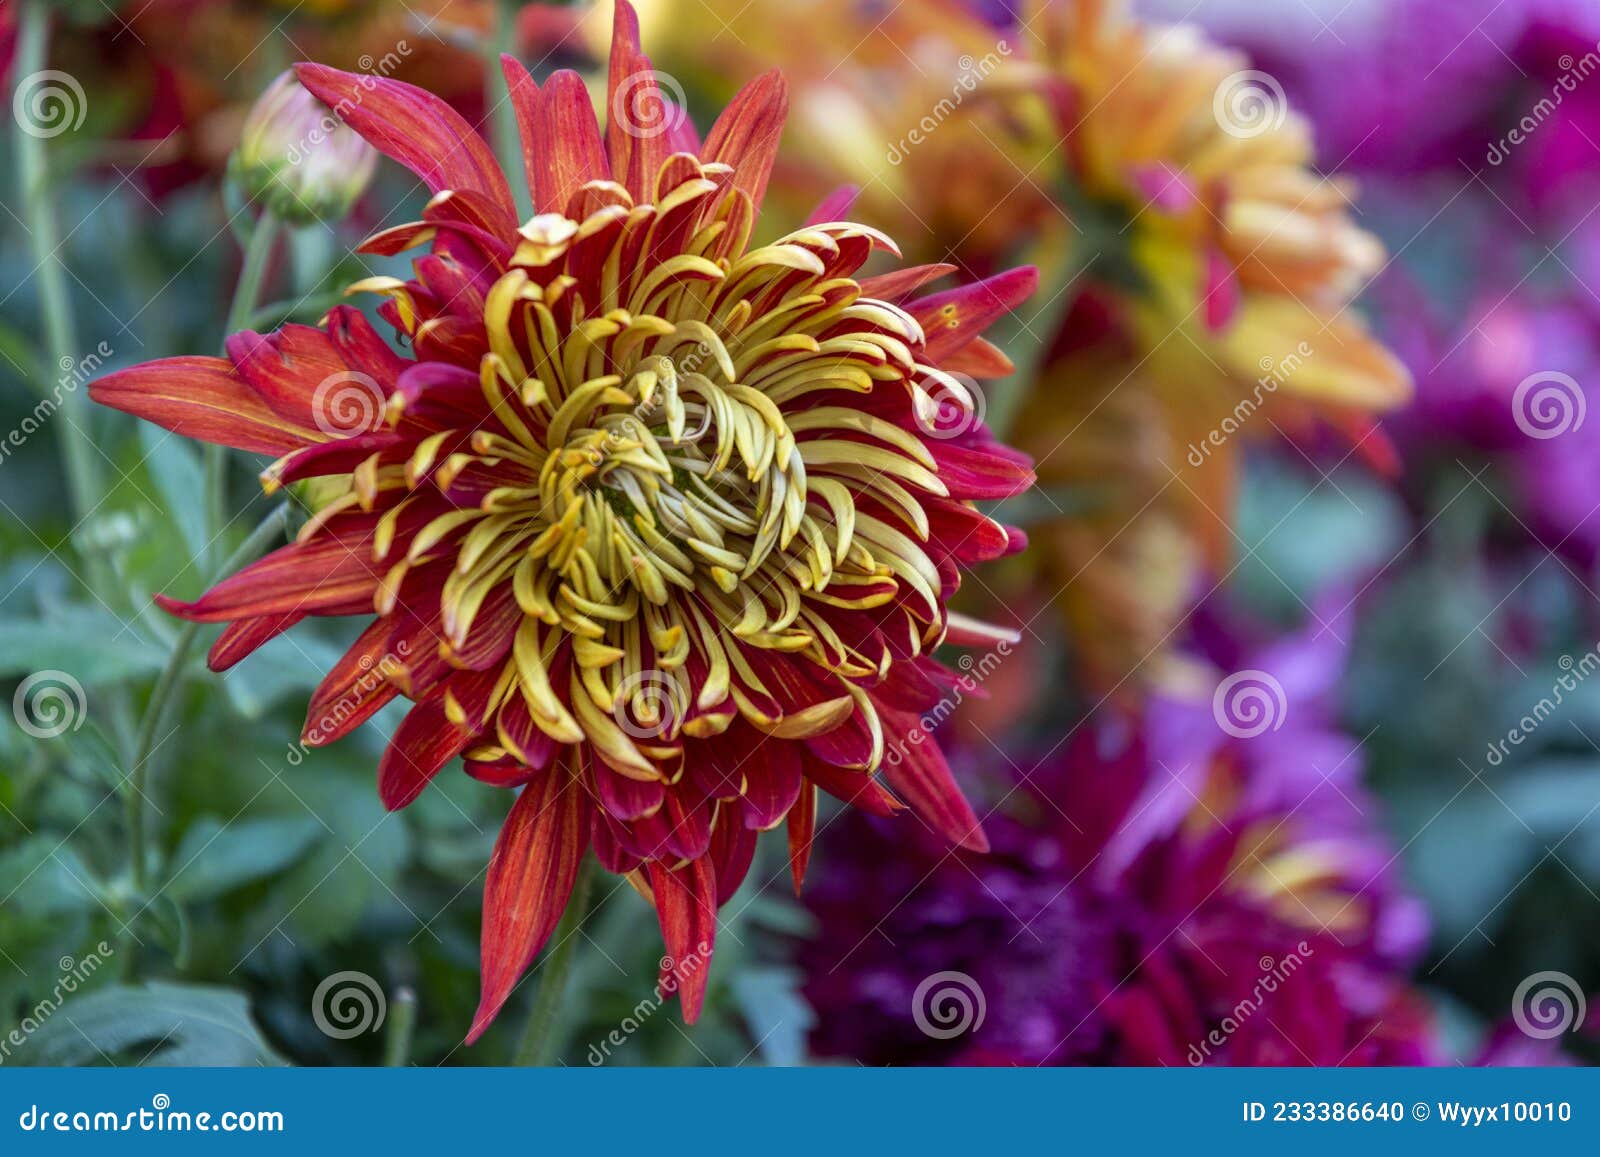 菊花是中国十大名花之一chrysanthemum Is One Of The Top Ten Famous Flowers In China Stock Photo Image Of World Largest